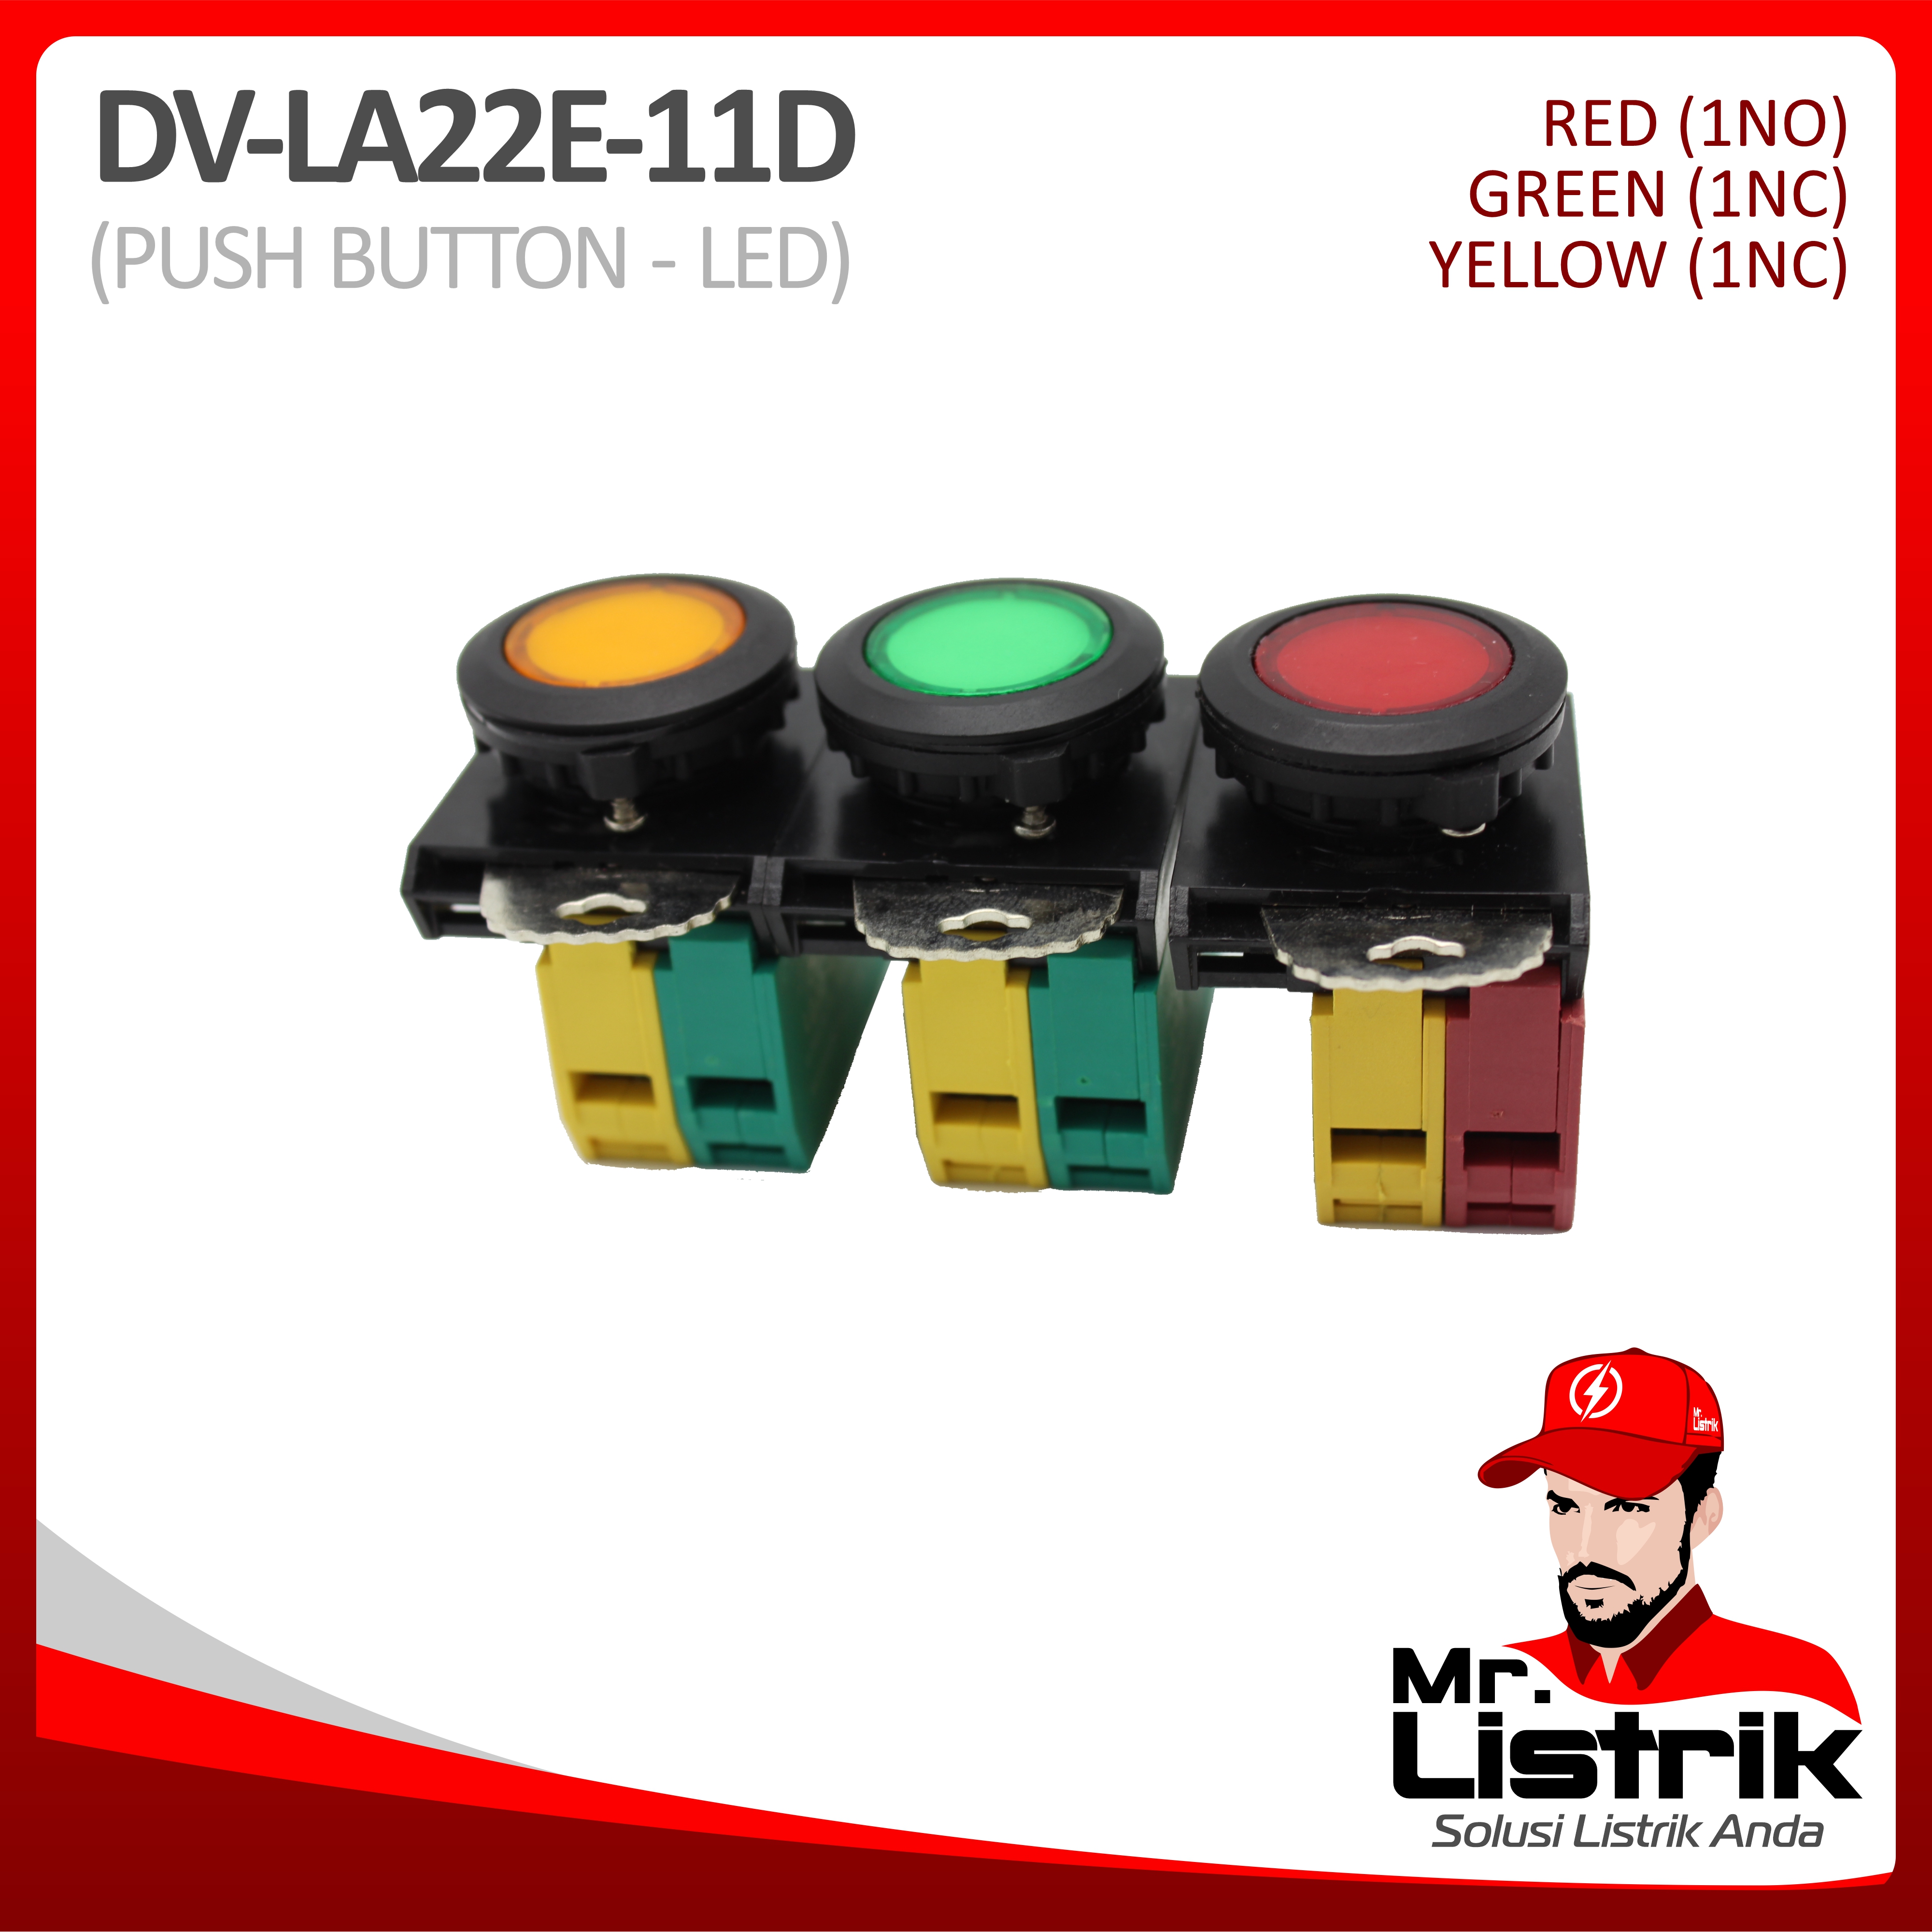 Push Button LED 22mm Waterproof Modular 1NC LA22E-11D Red / Green / Yellow